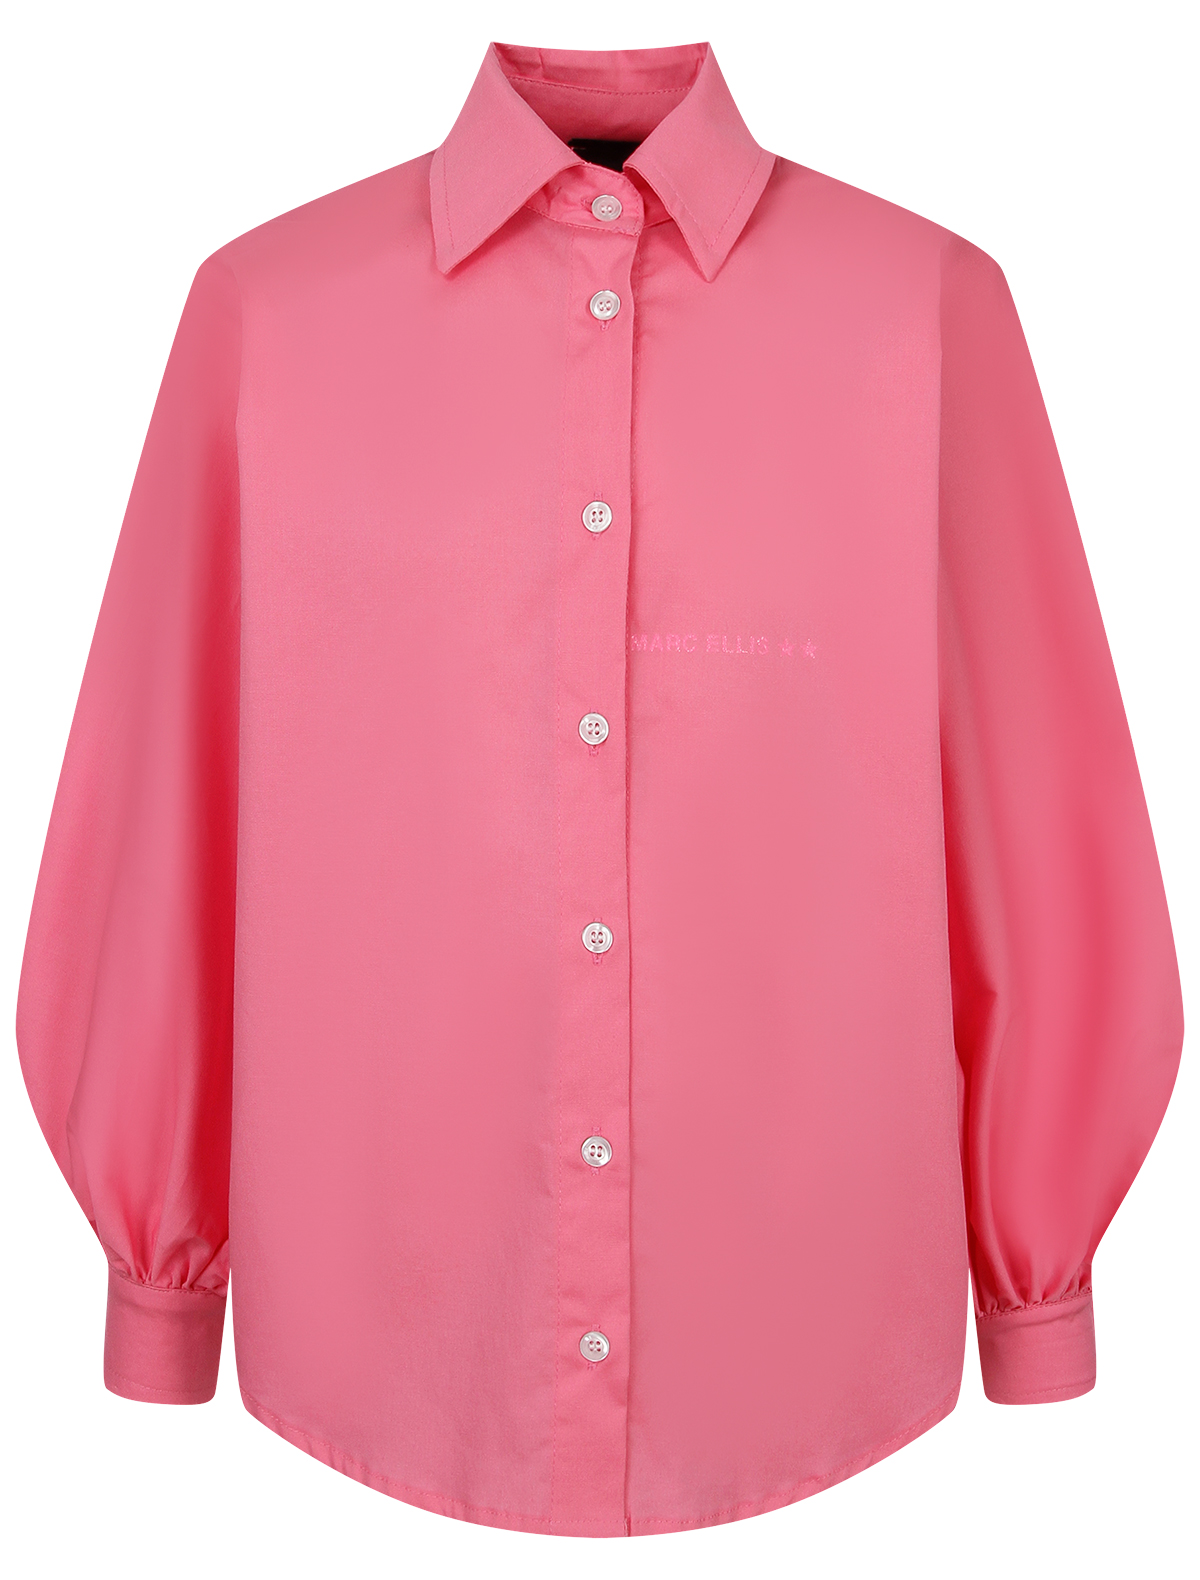 Блуза Marc Ellis 2558569, цвет розовый, размер 7 1034509373111 - фото 1